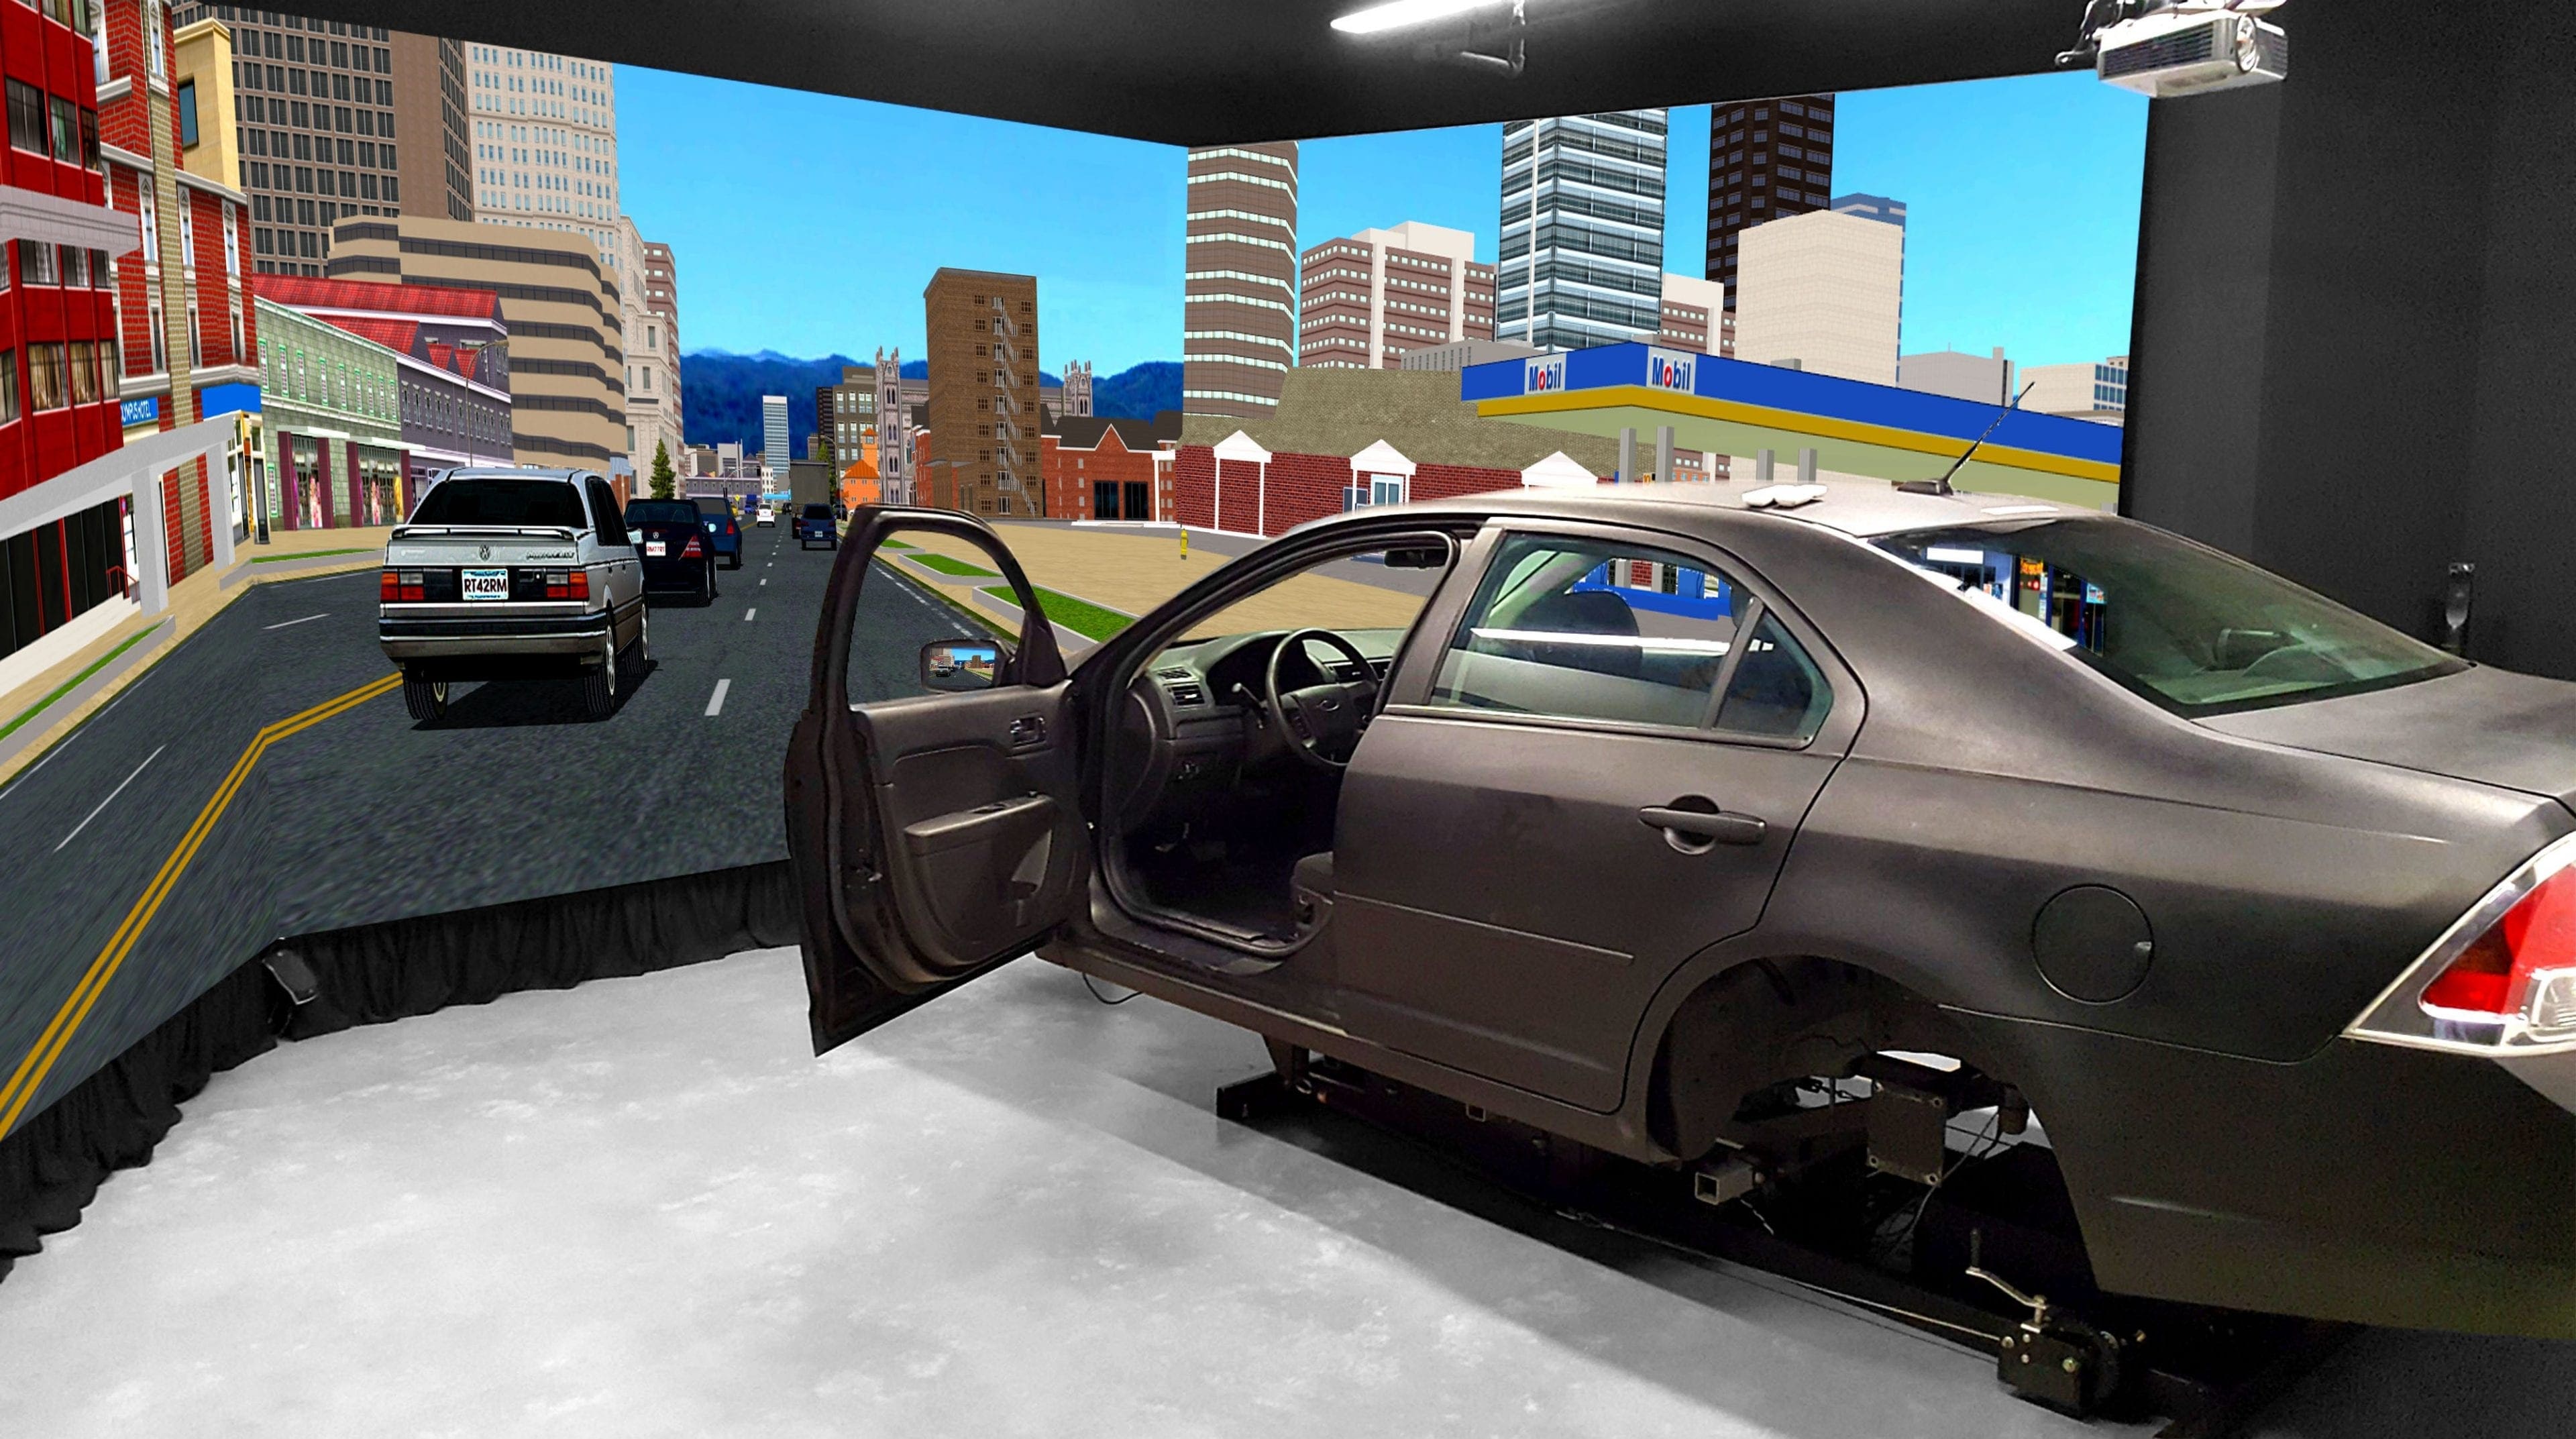 Vehicle Simulation Automotive Vehicle Simulation Software & Research